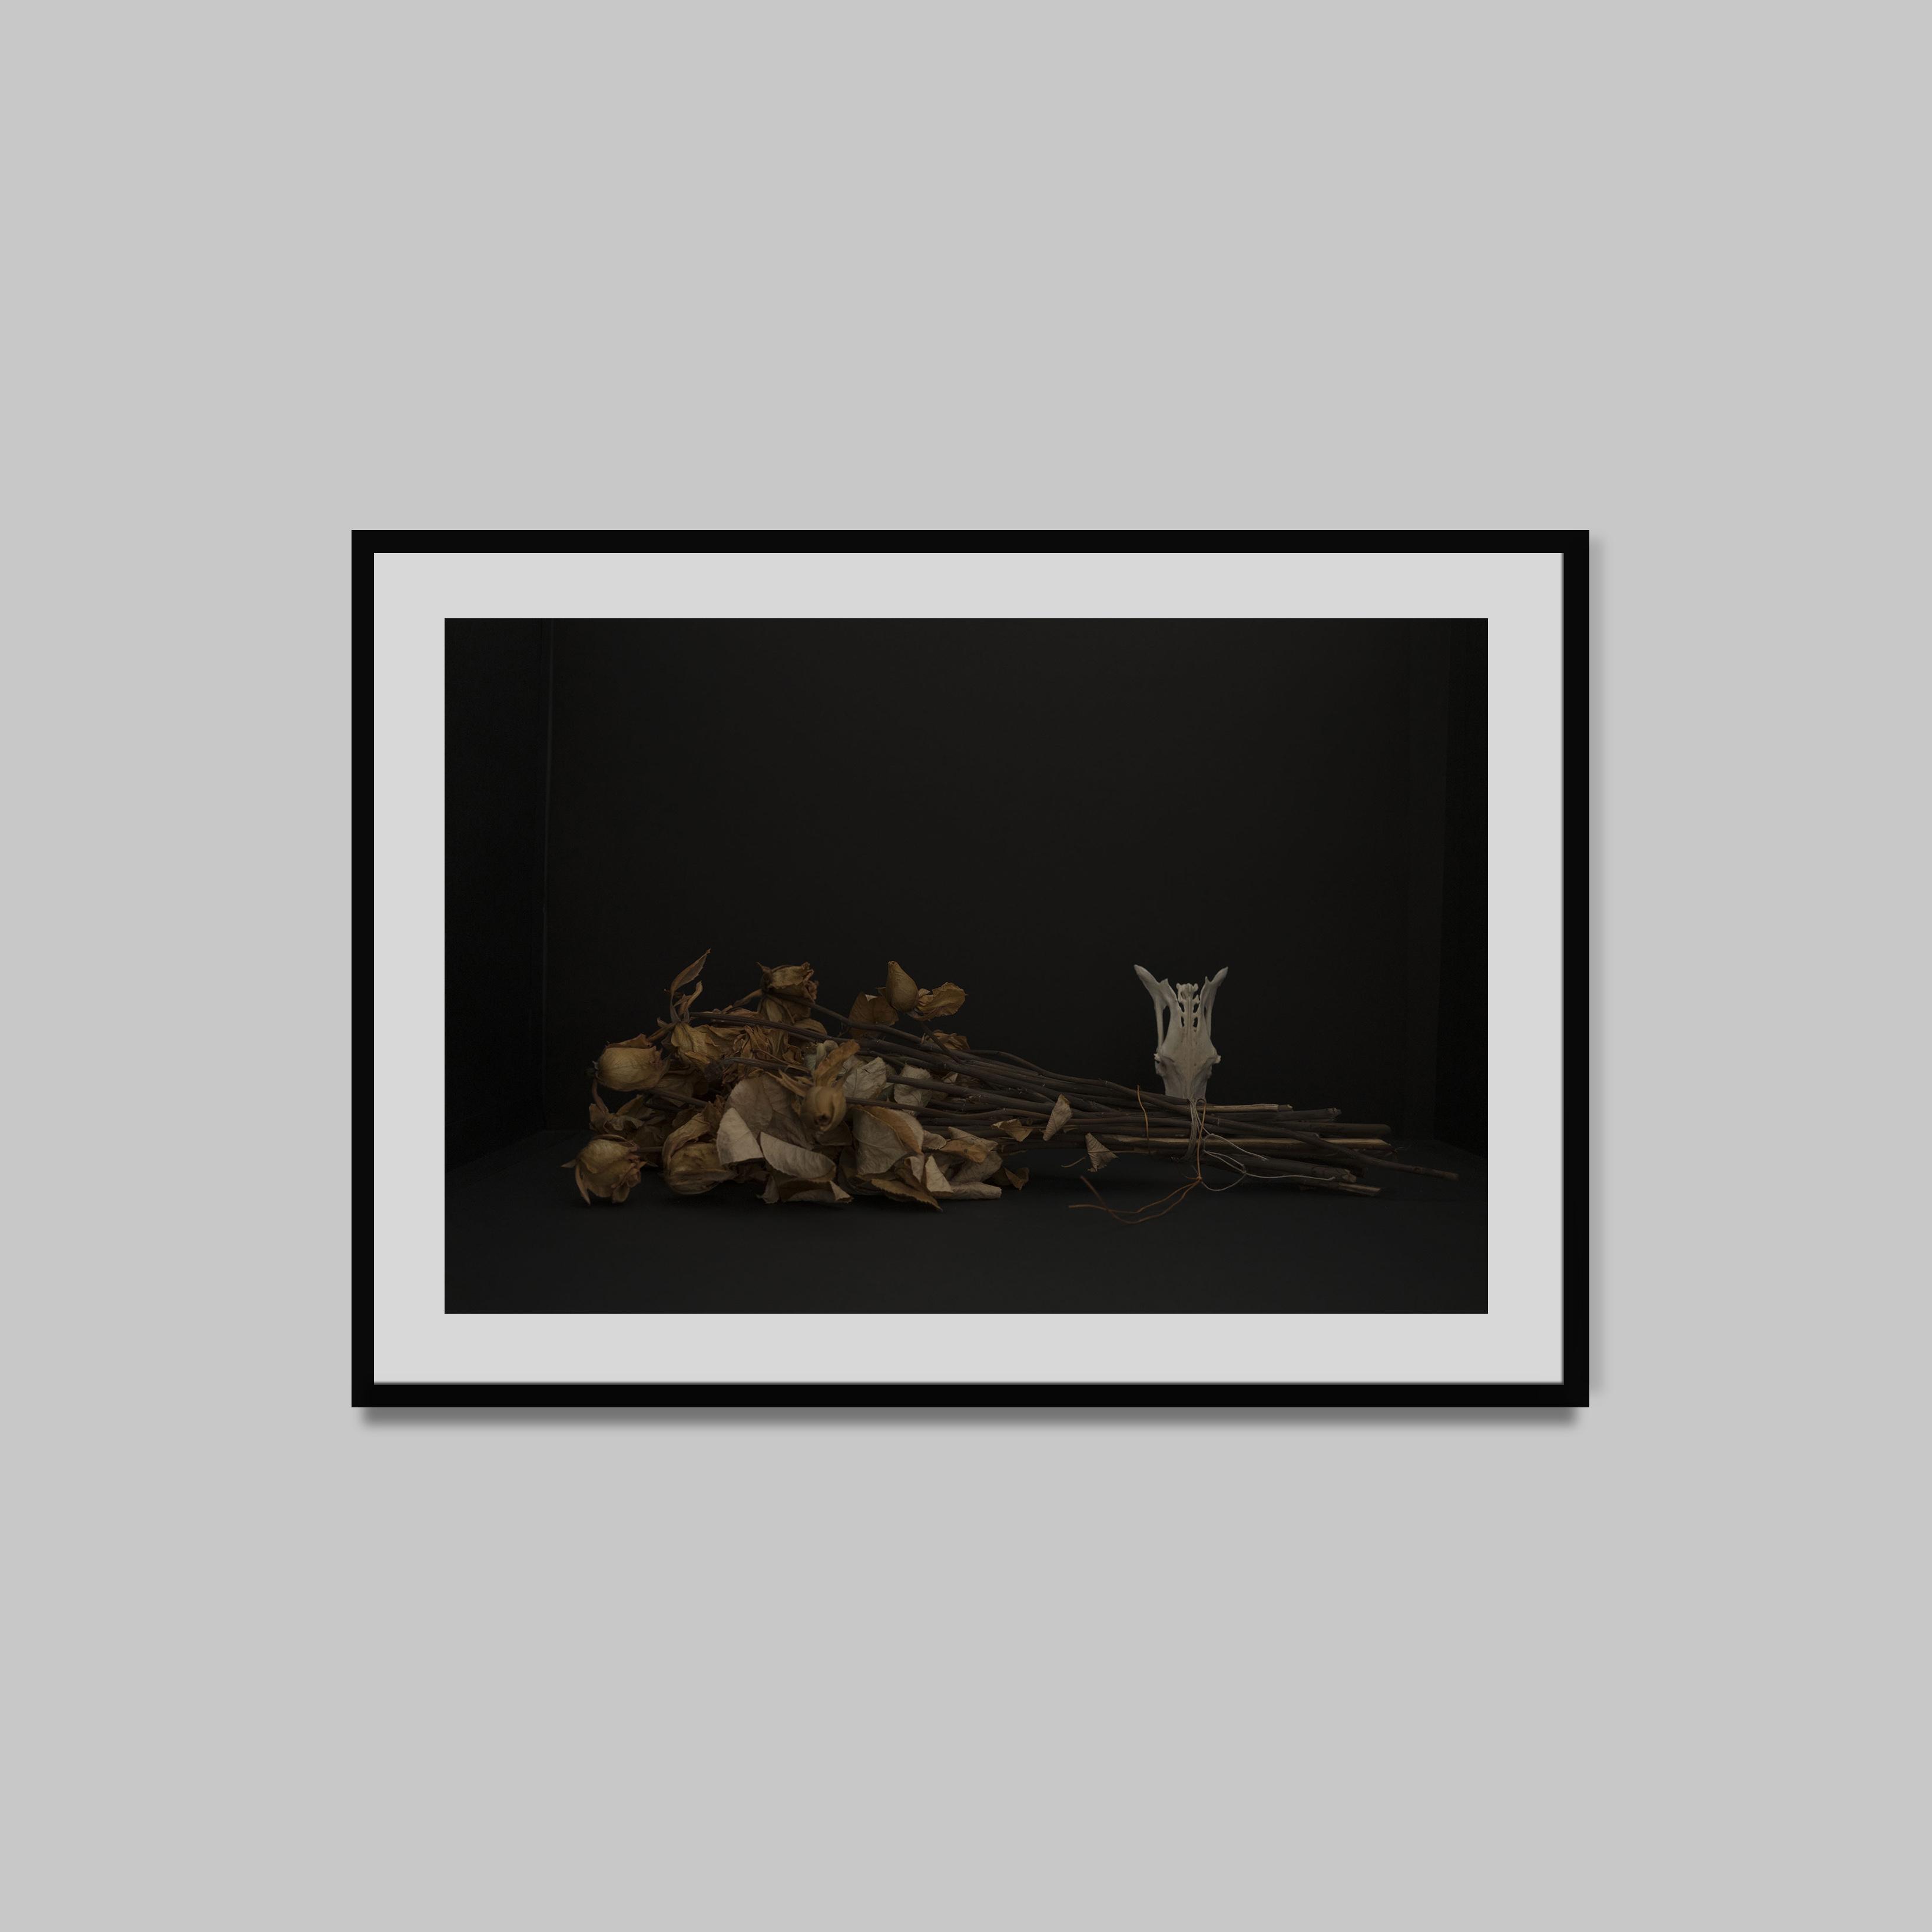 Vanités I, 2015
Photographie-tirage fine art
60 x 90 cm